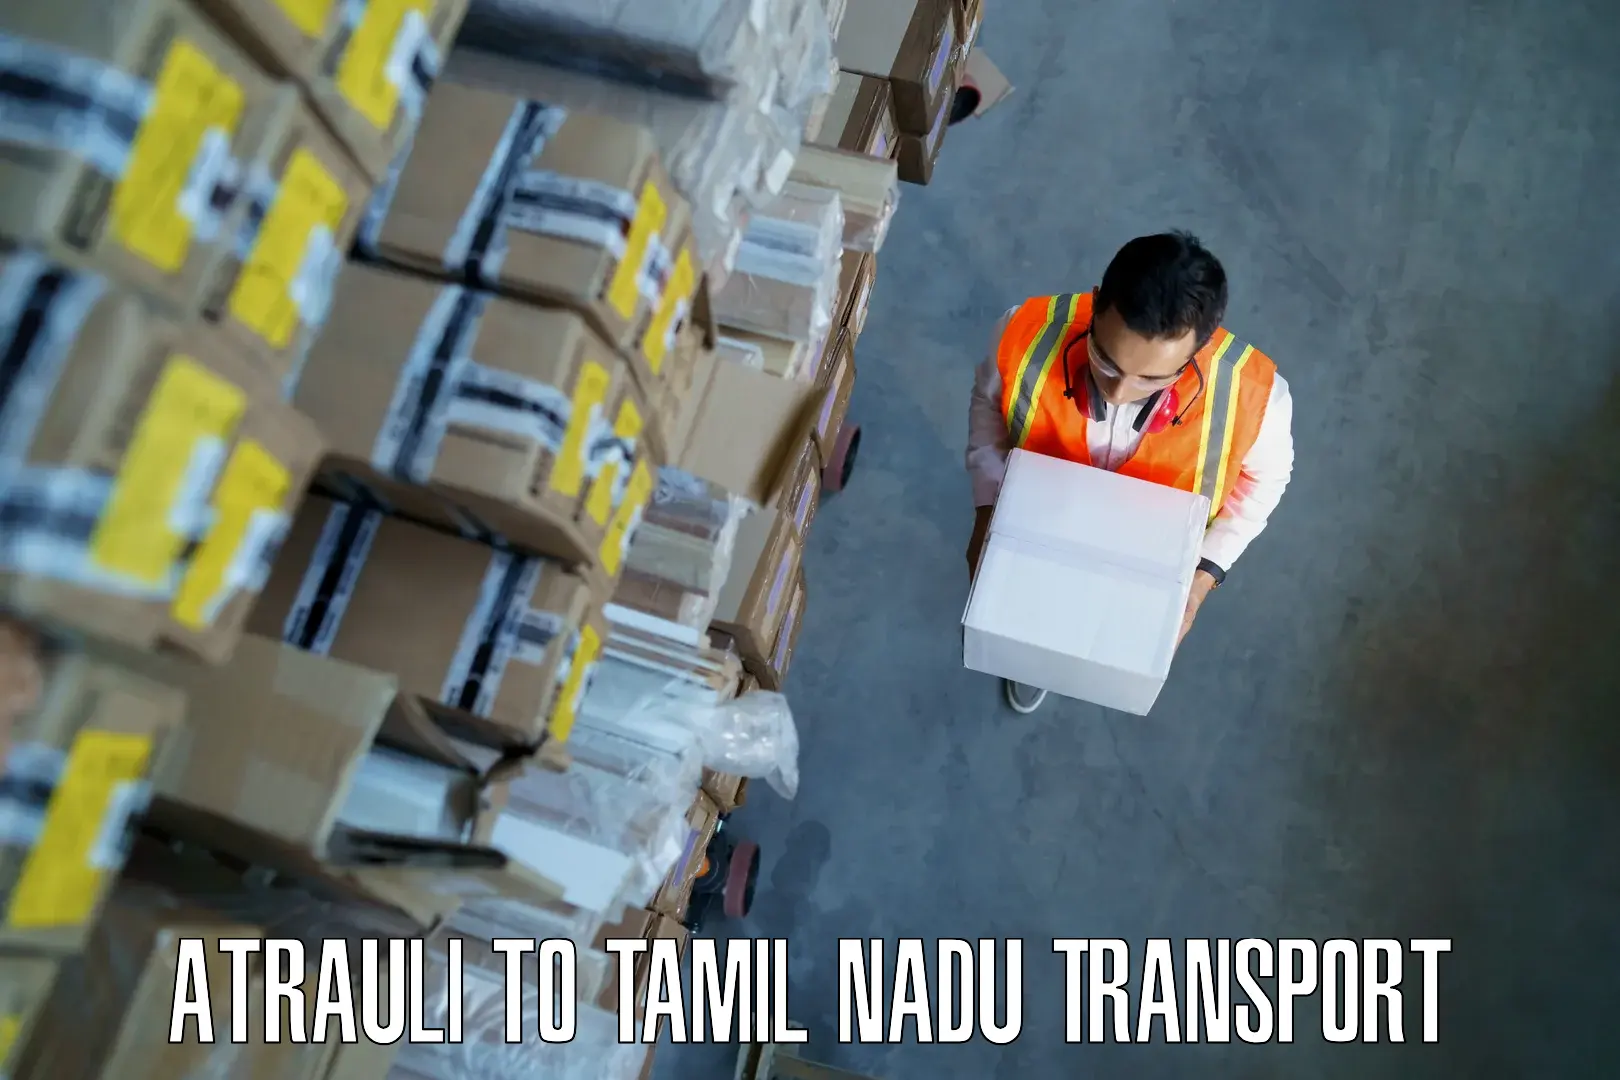 Transport in sharing Atrauli to Tamil Nadu